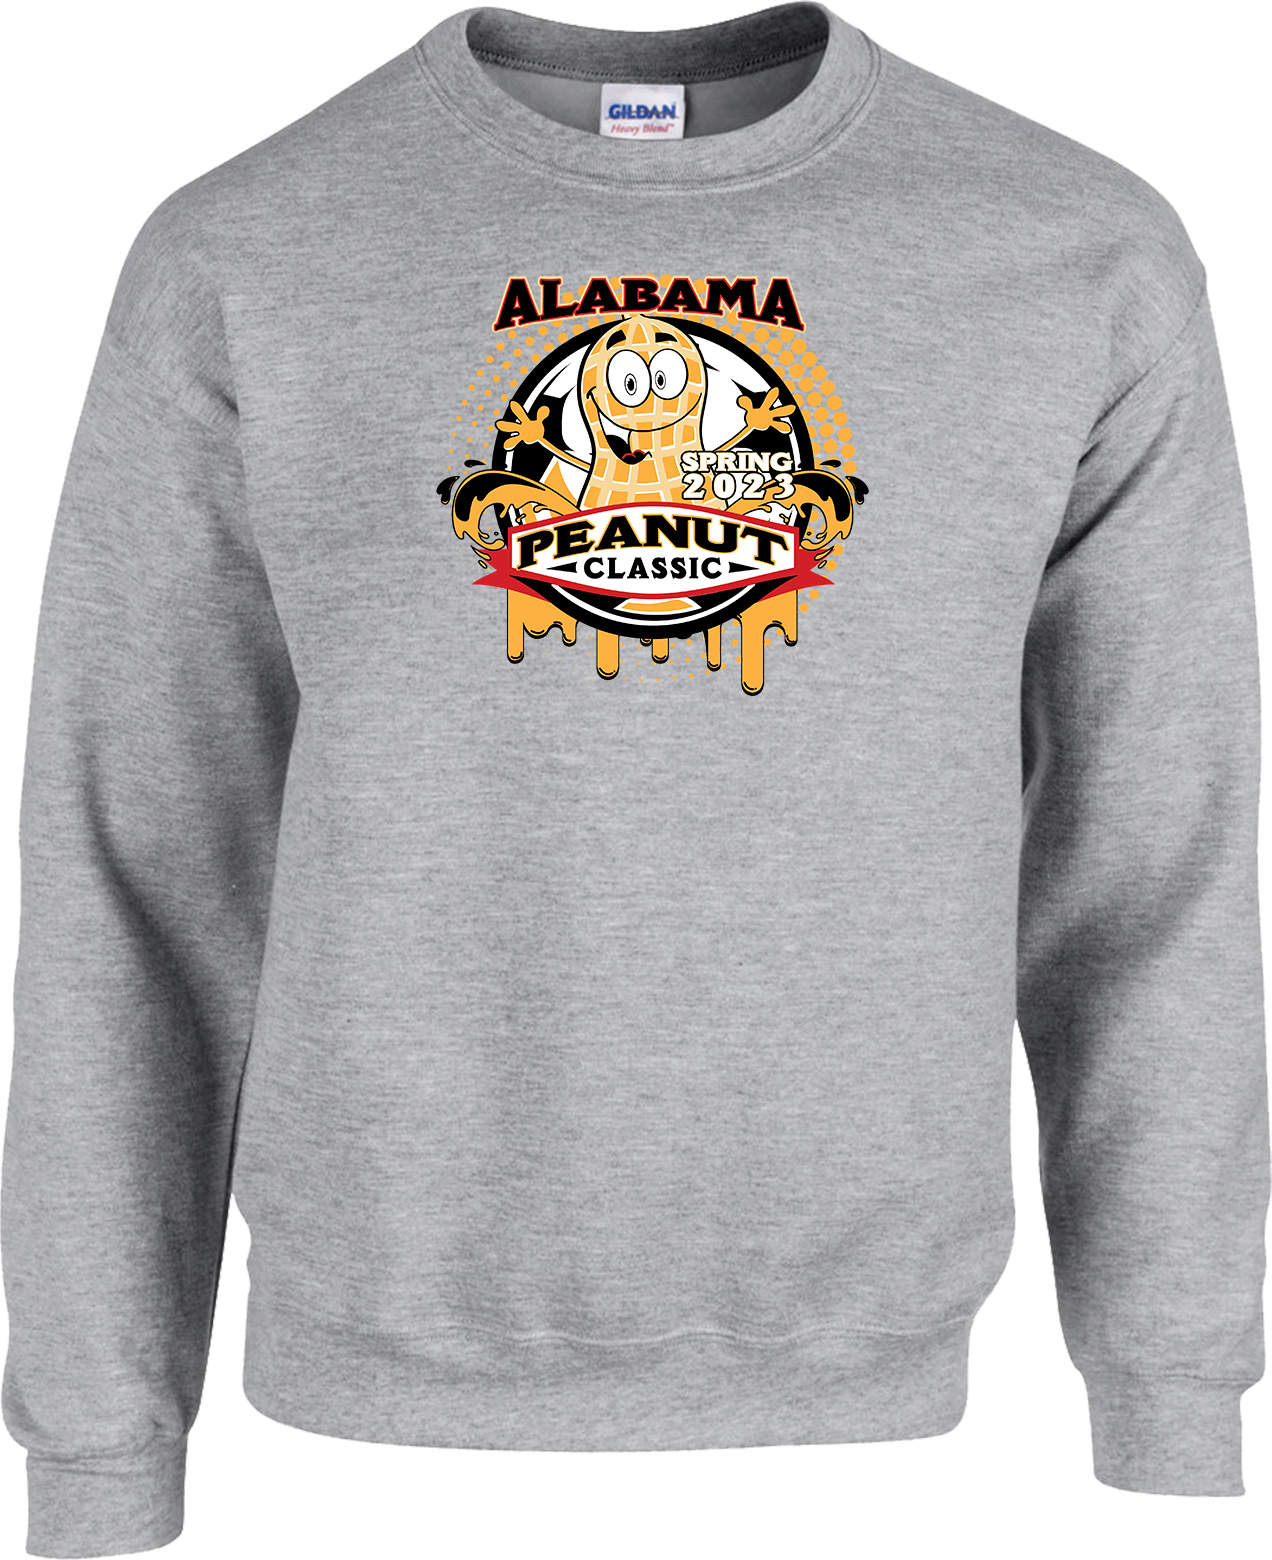 CREW SWEATSHIRT - 2023 Alabama Peanut Classic Spring